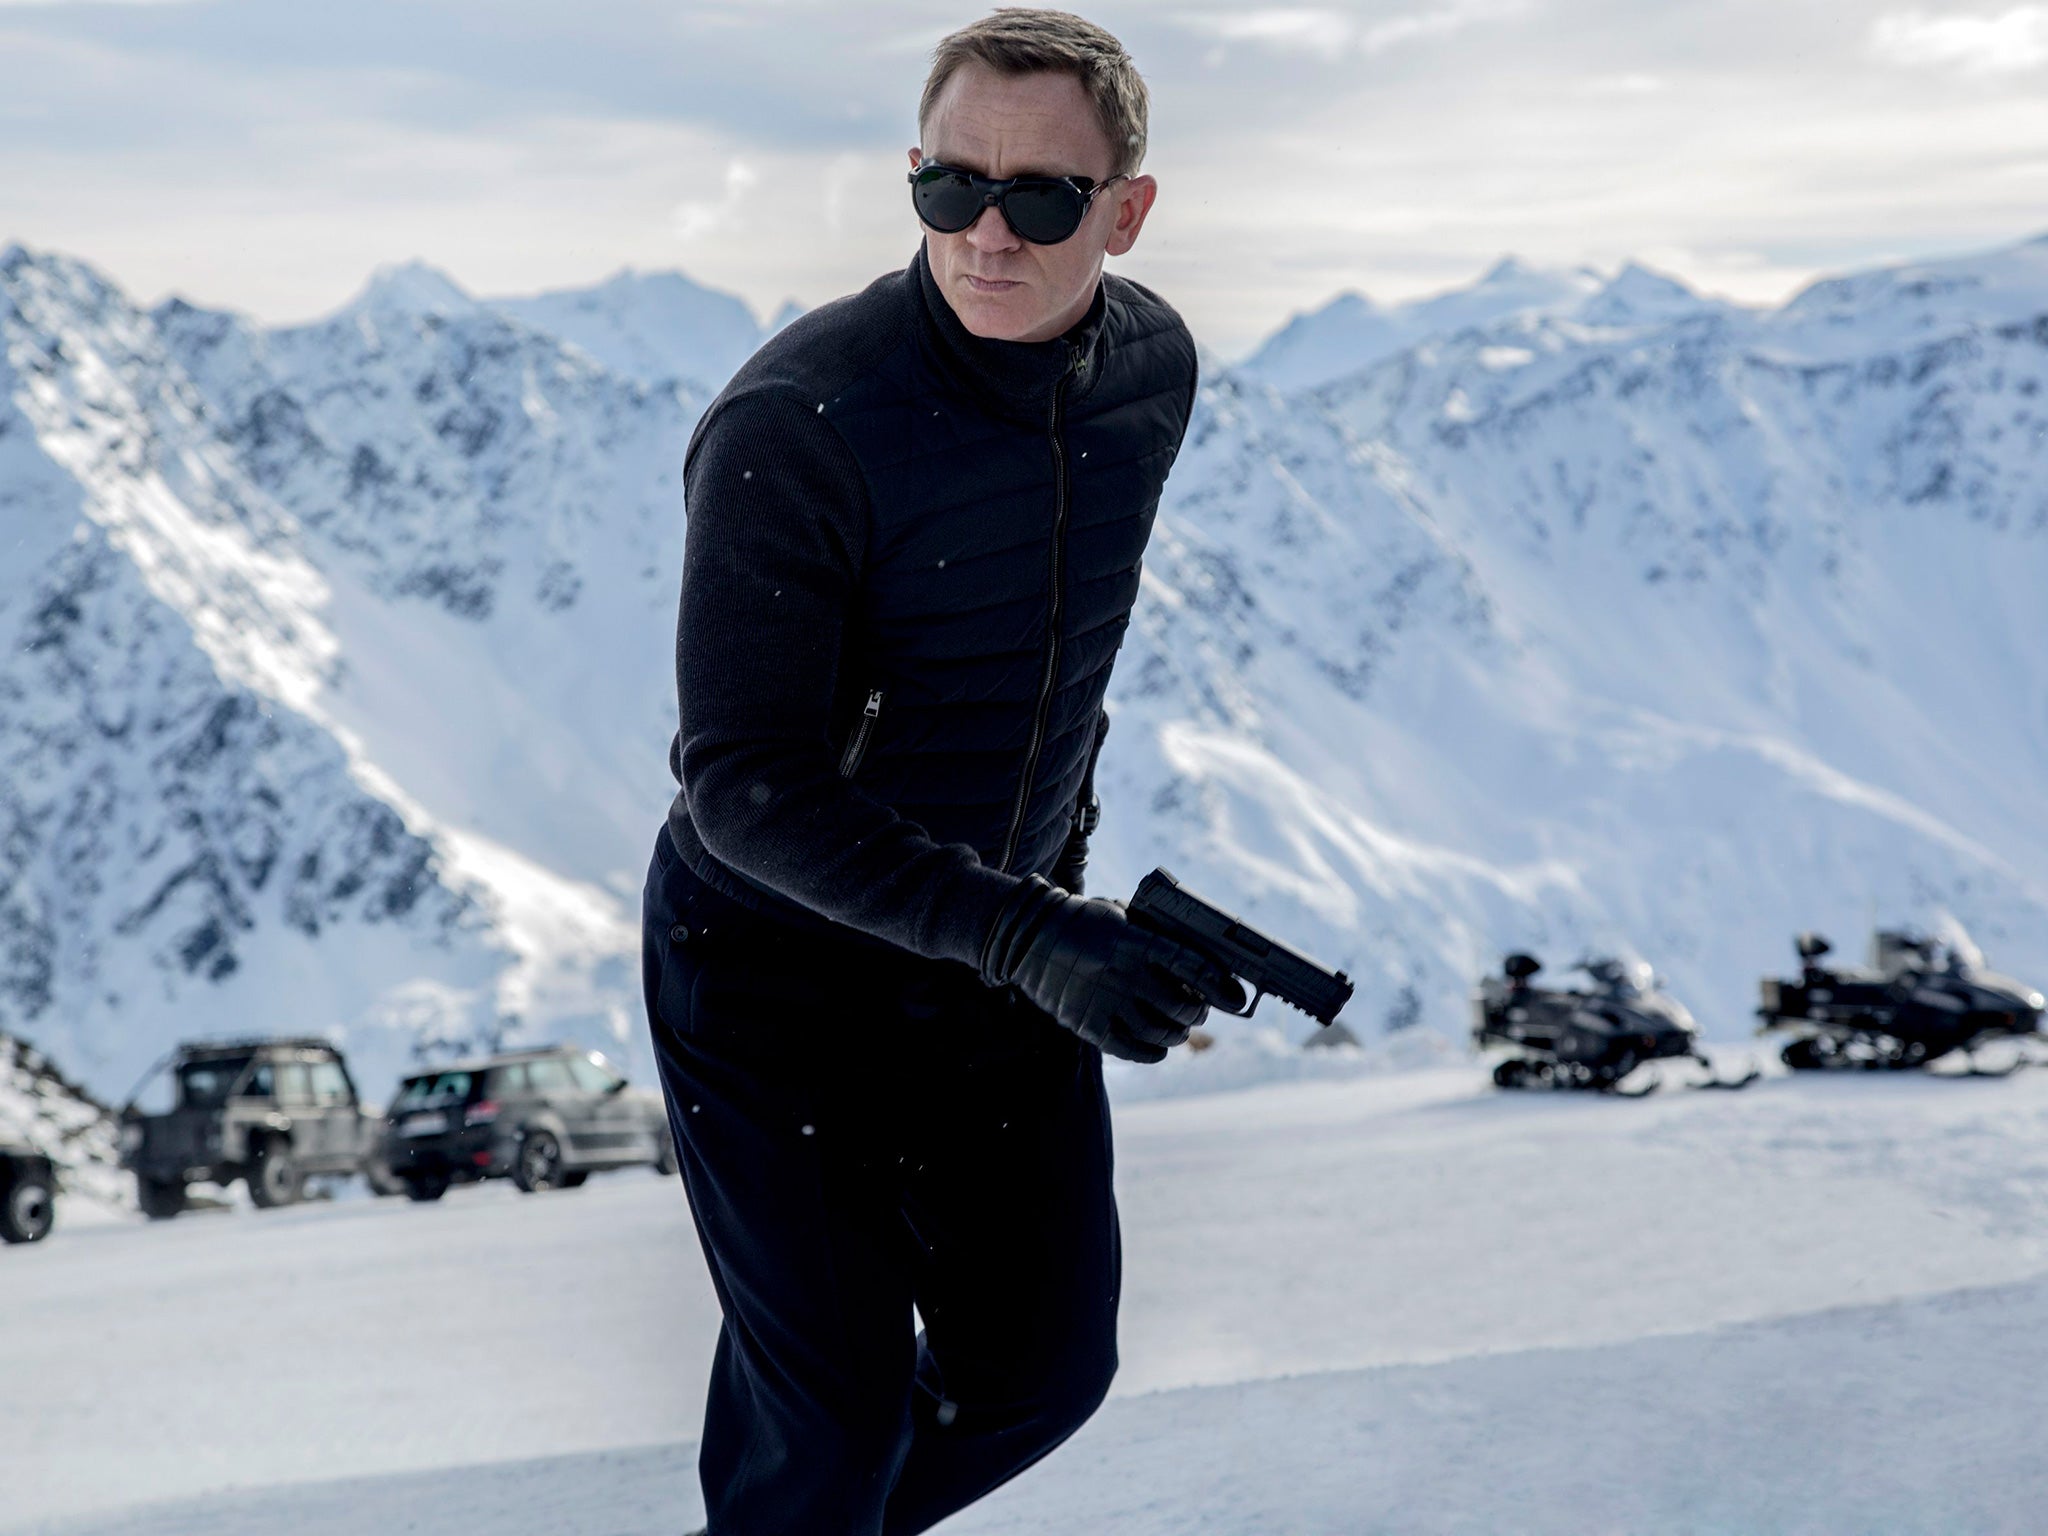 Daniel Craig as James Bond in the upcoming film ‘Spectre’